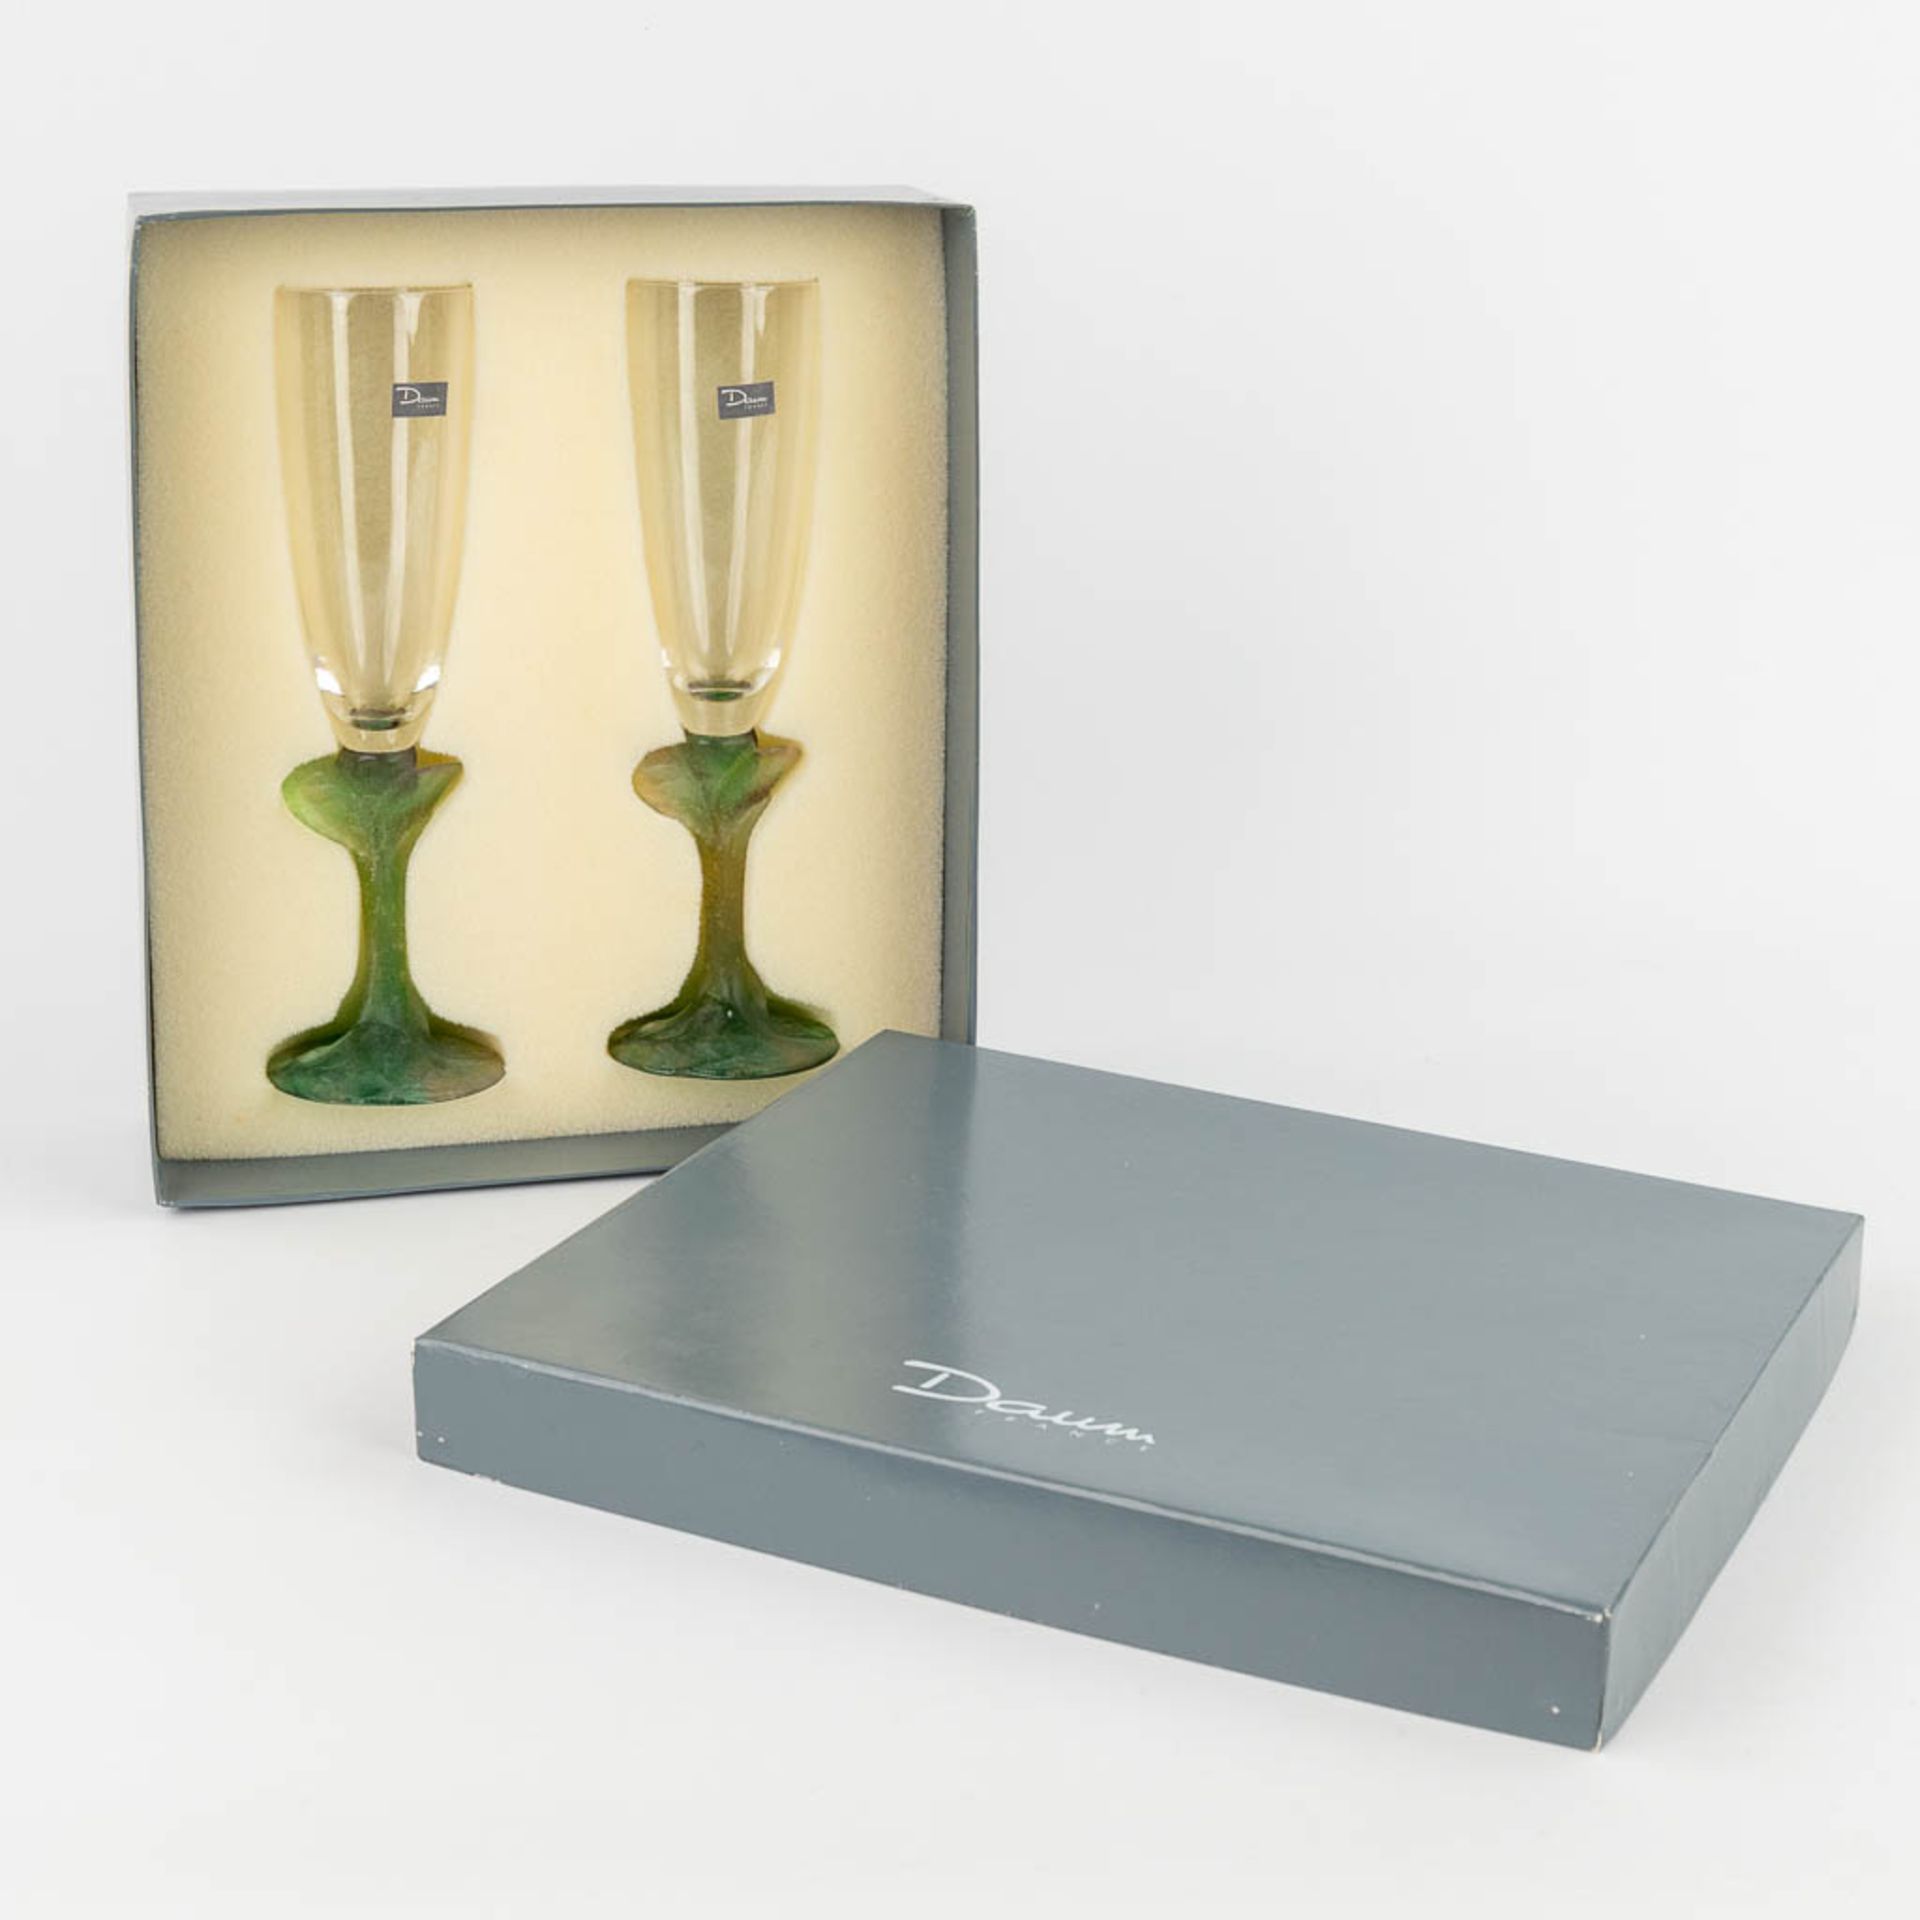 Daum France, 'Nature' a pair of champagne glasses in the original box. (H: 24 x D: 7 cm)